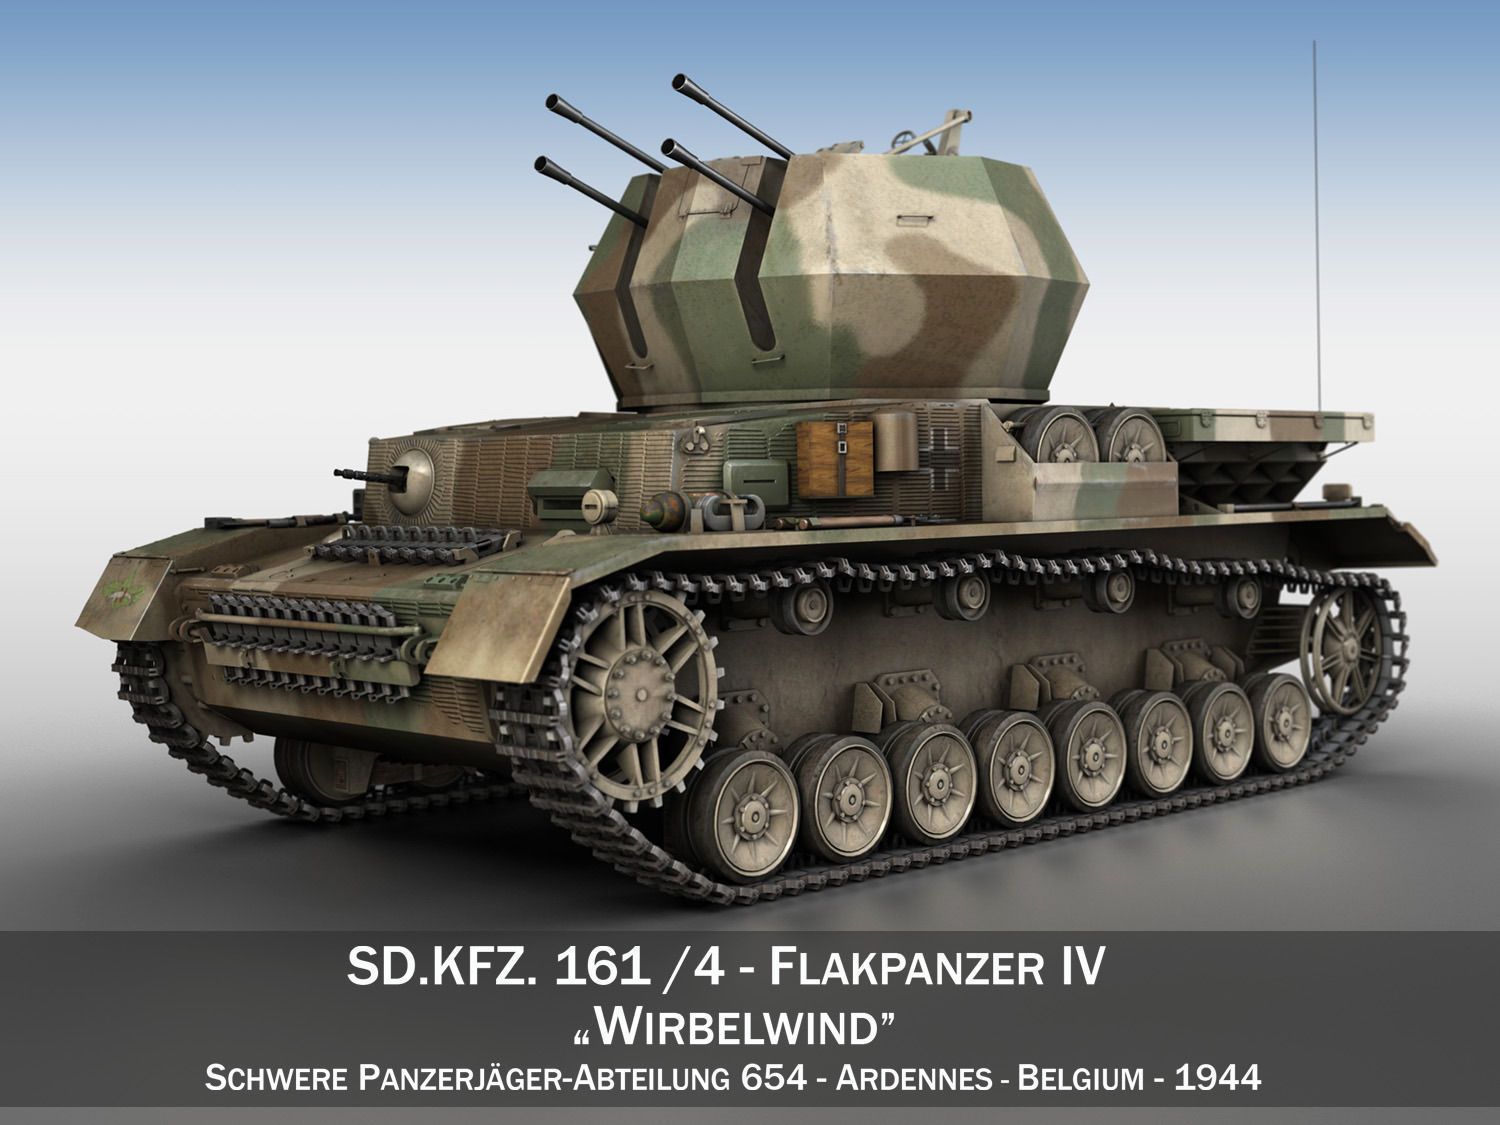 Flakpanzer IV Jg Abt 654D model. Wwii vehicles, Model tanks, Tanks military